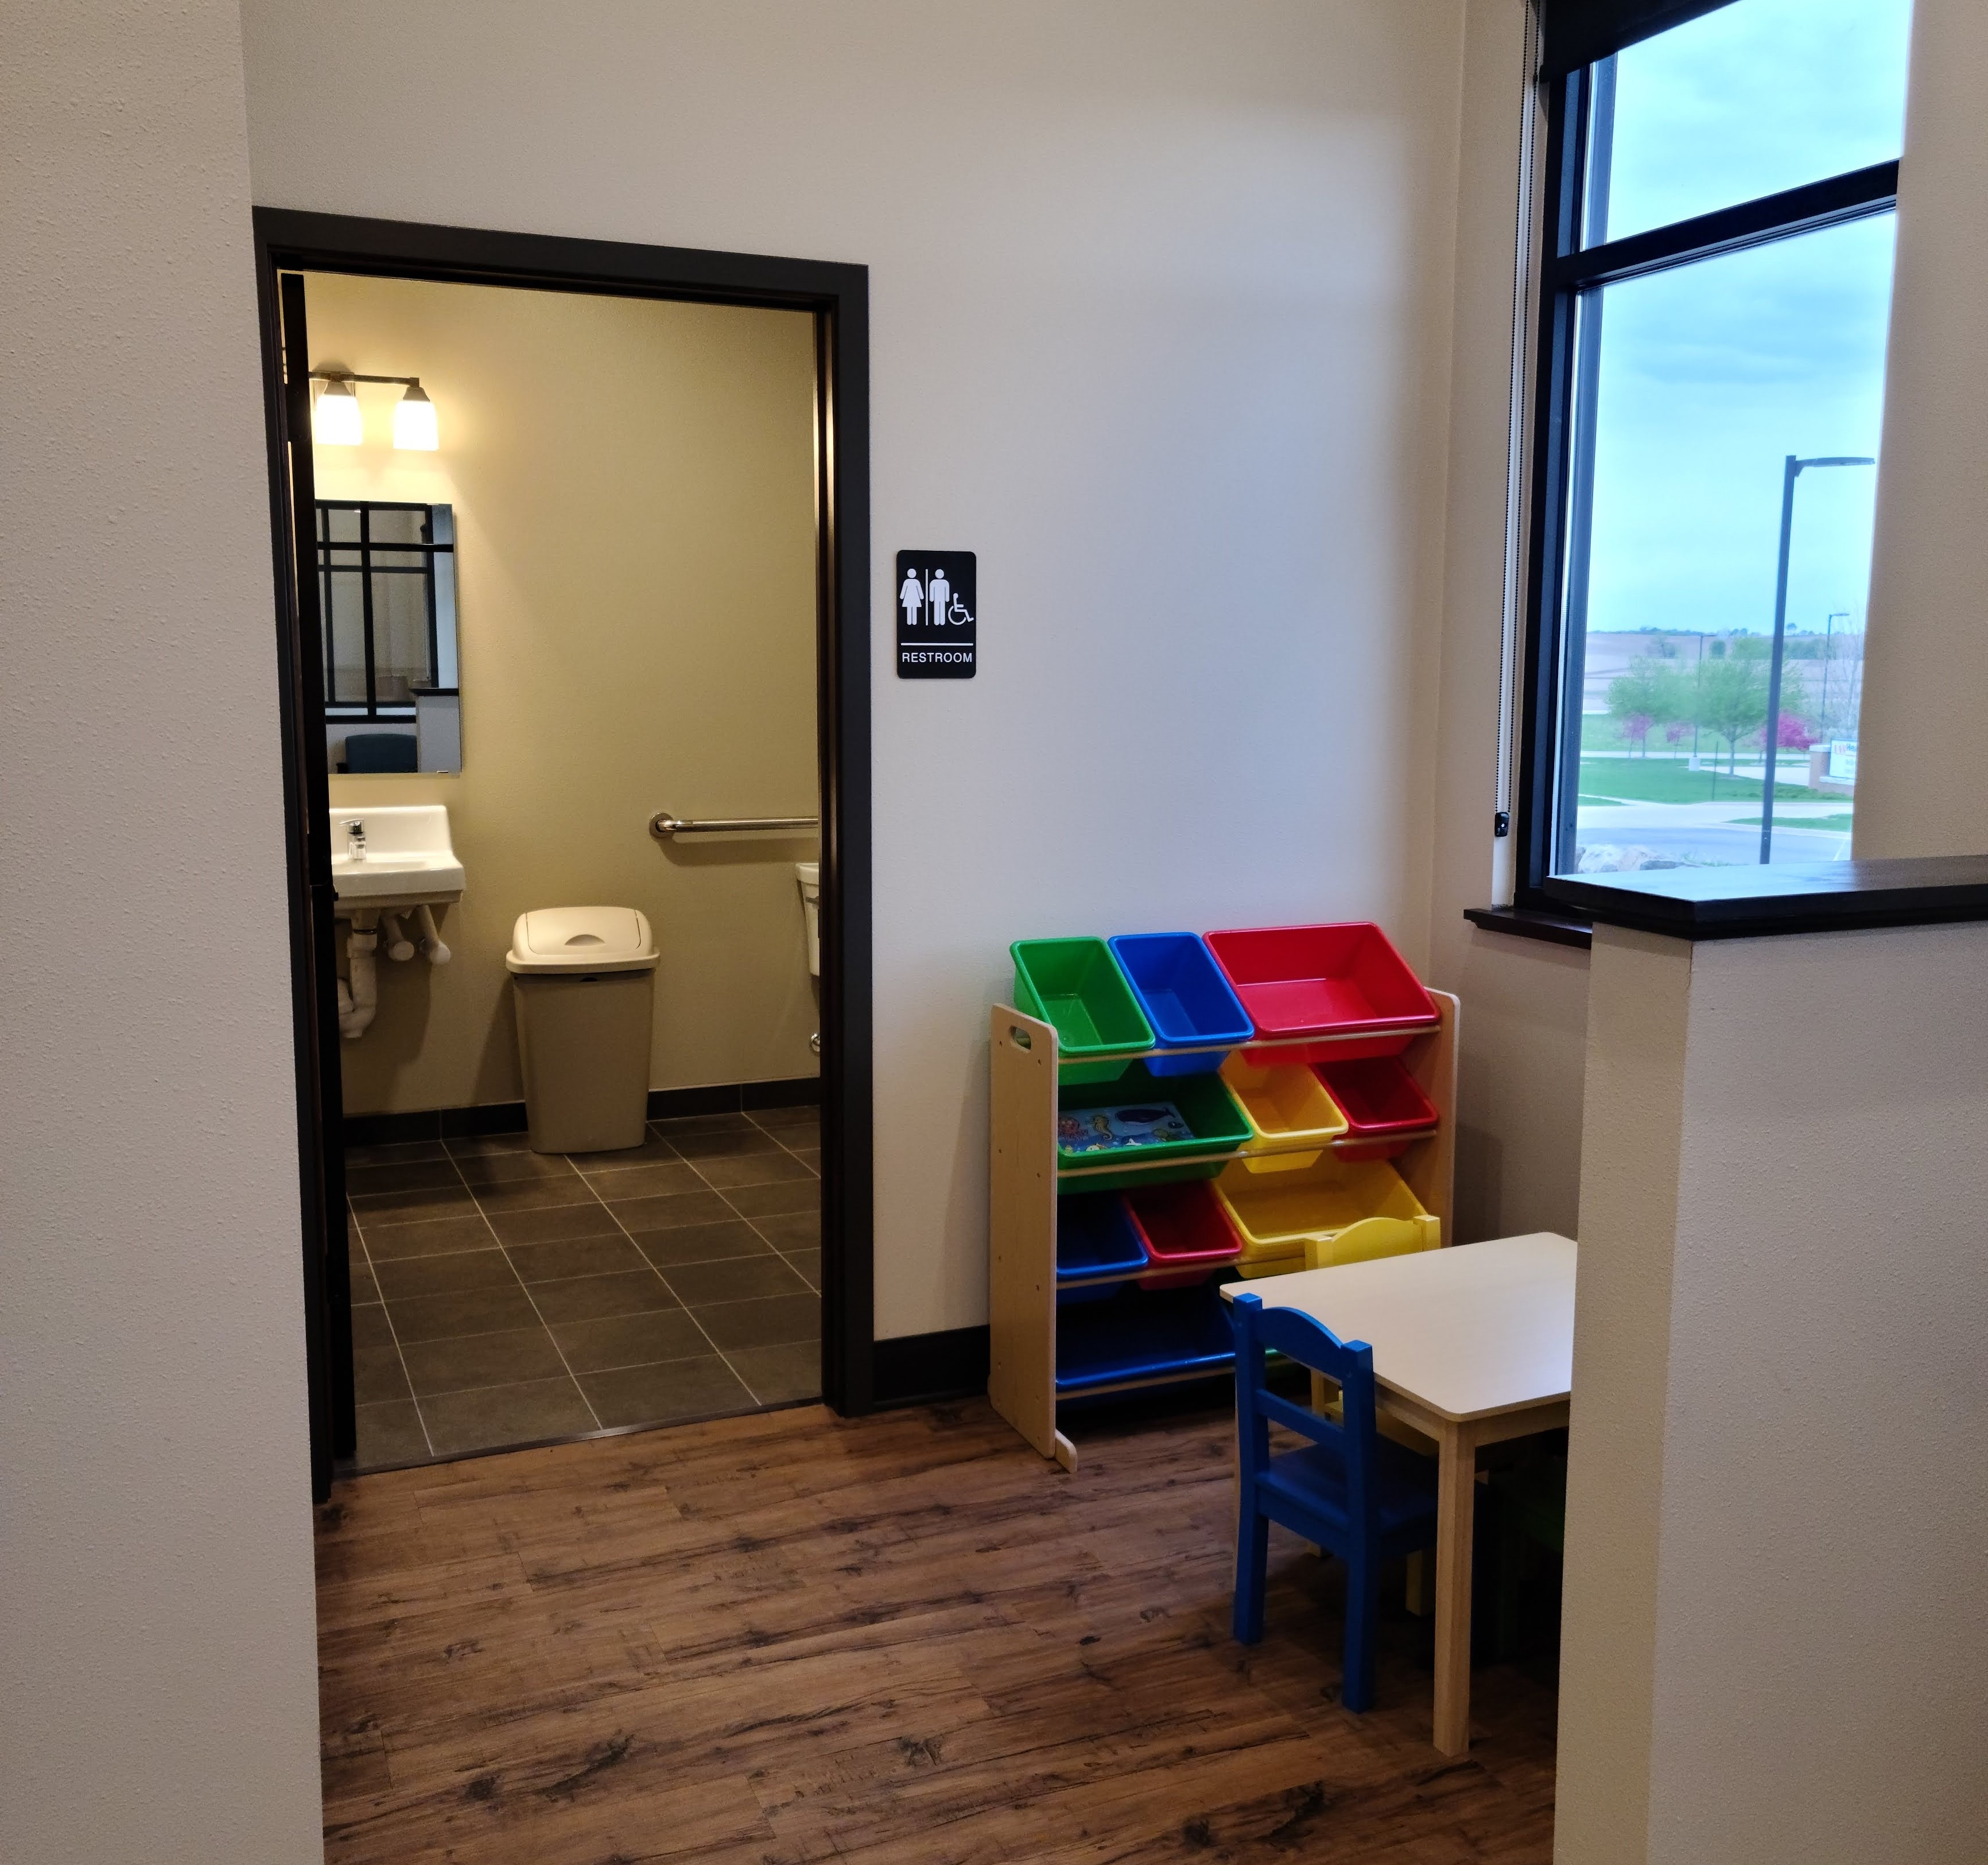 Kids area/restroom